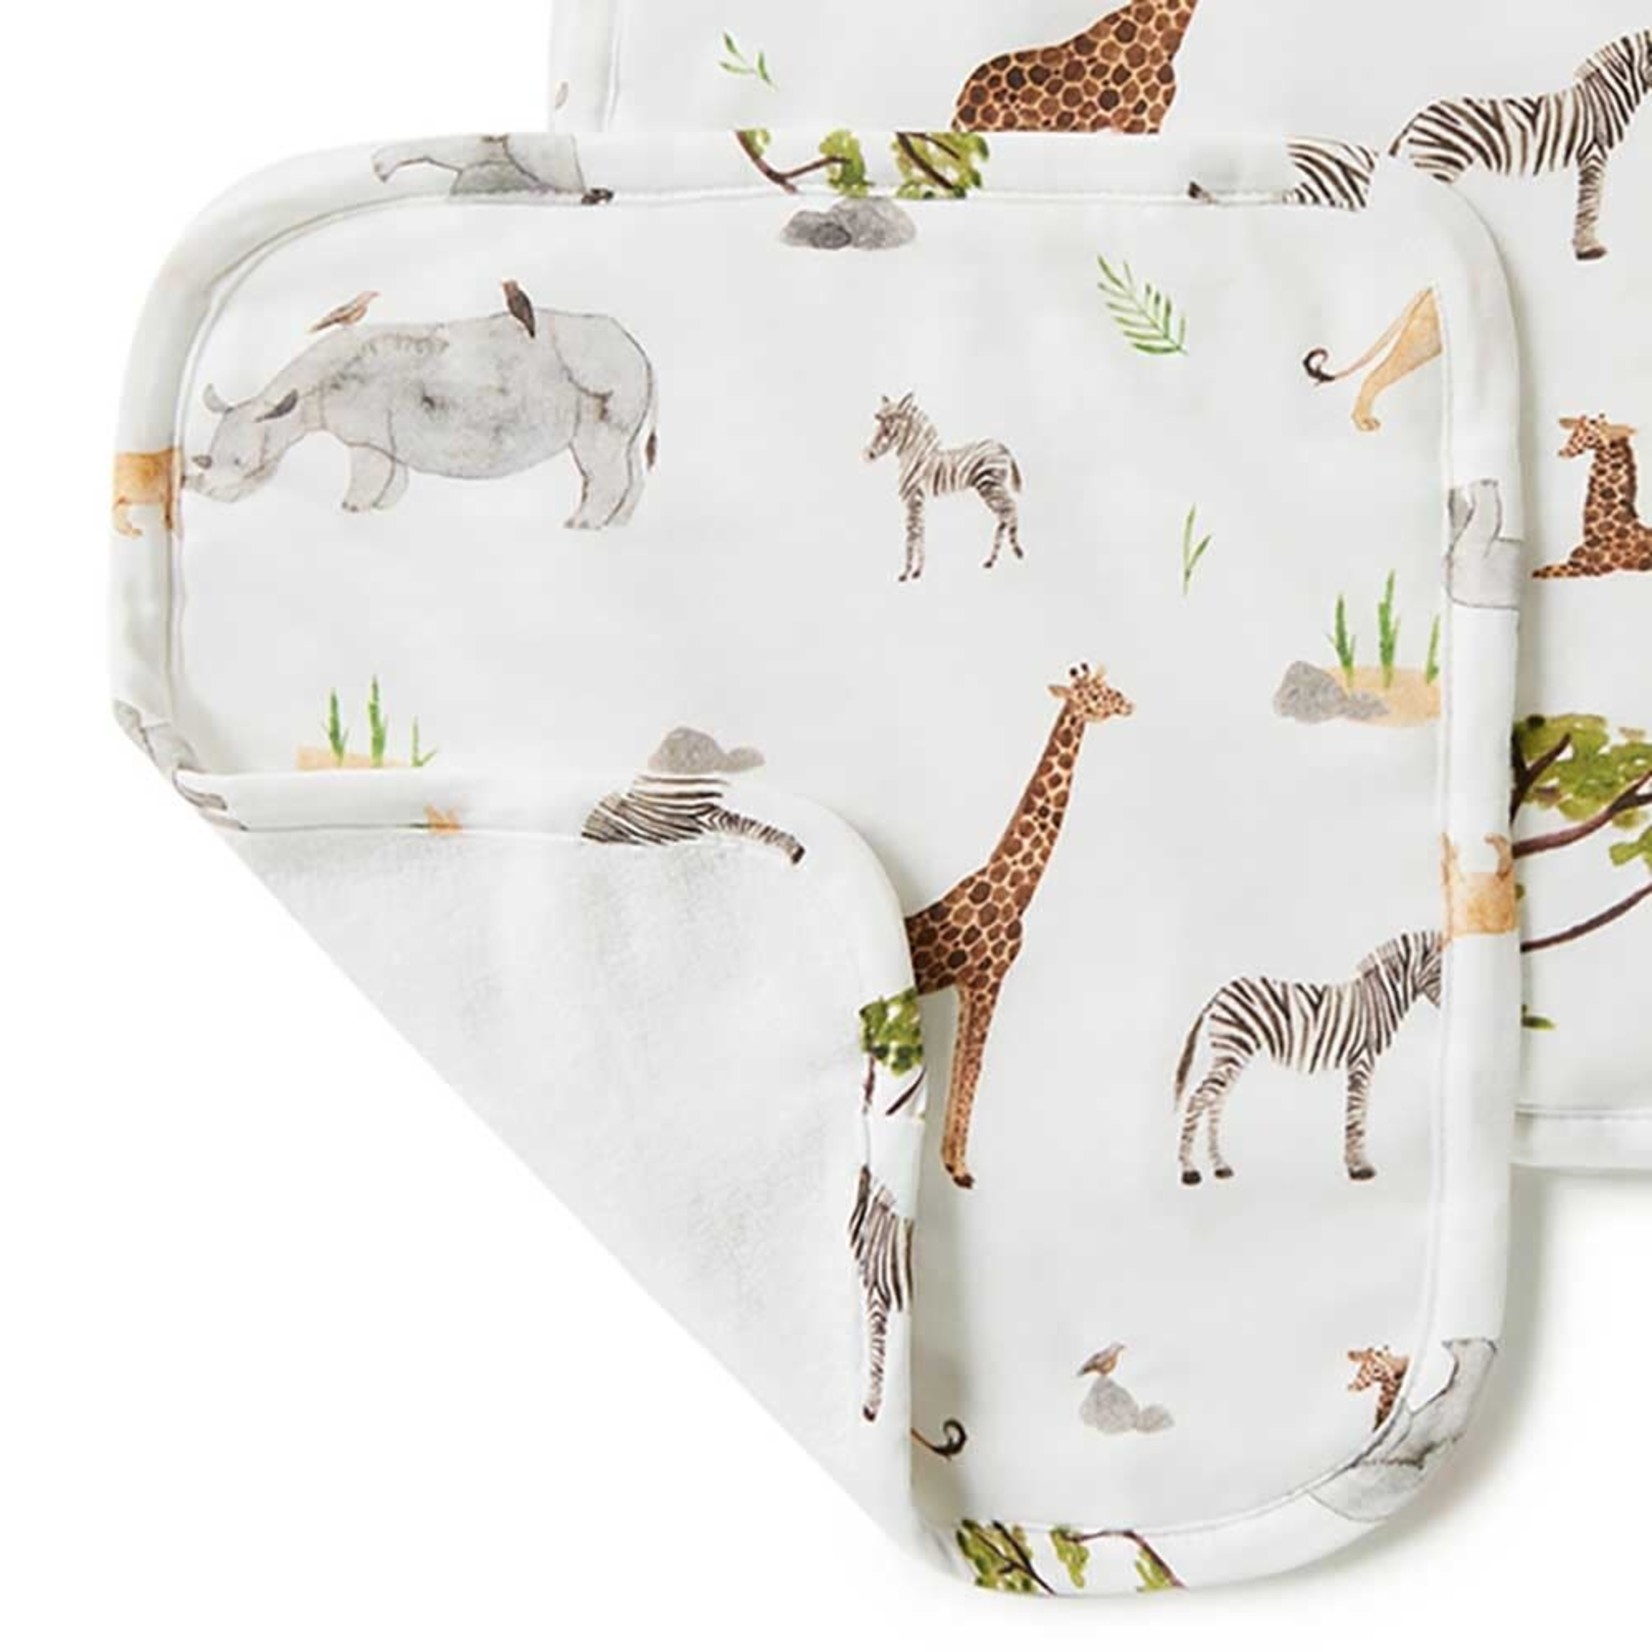 Snuggle Hunny Organic Wash Cloths(3 Pack)-Safari